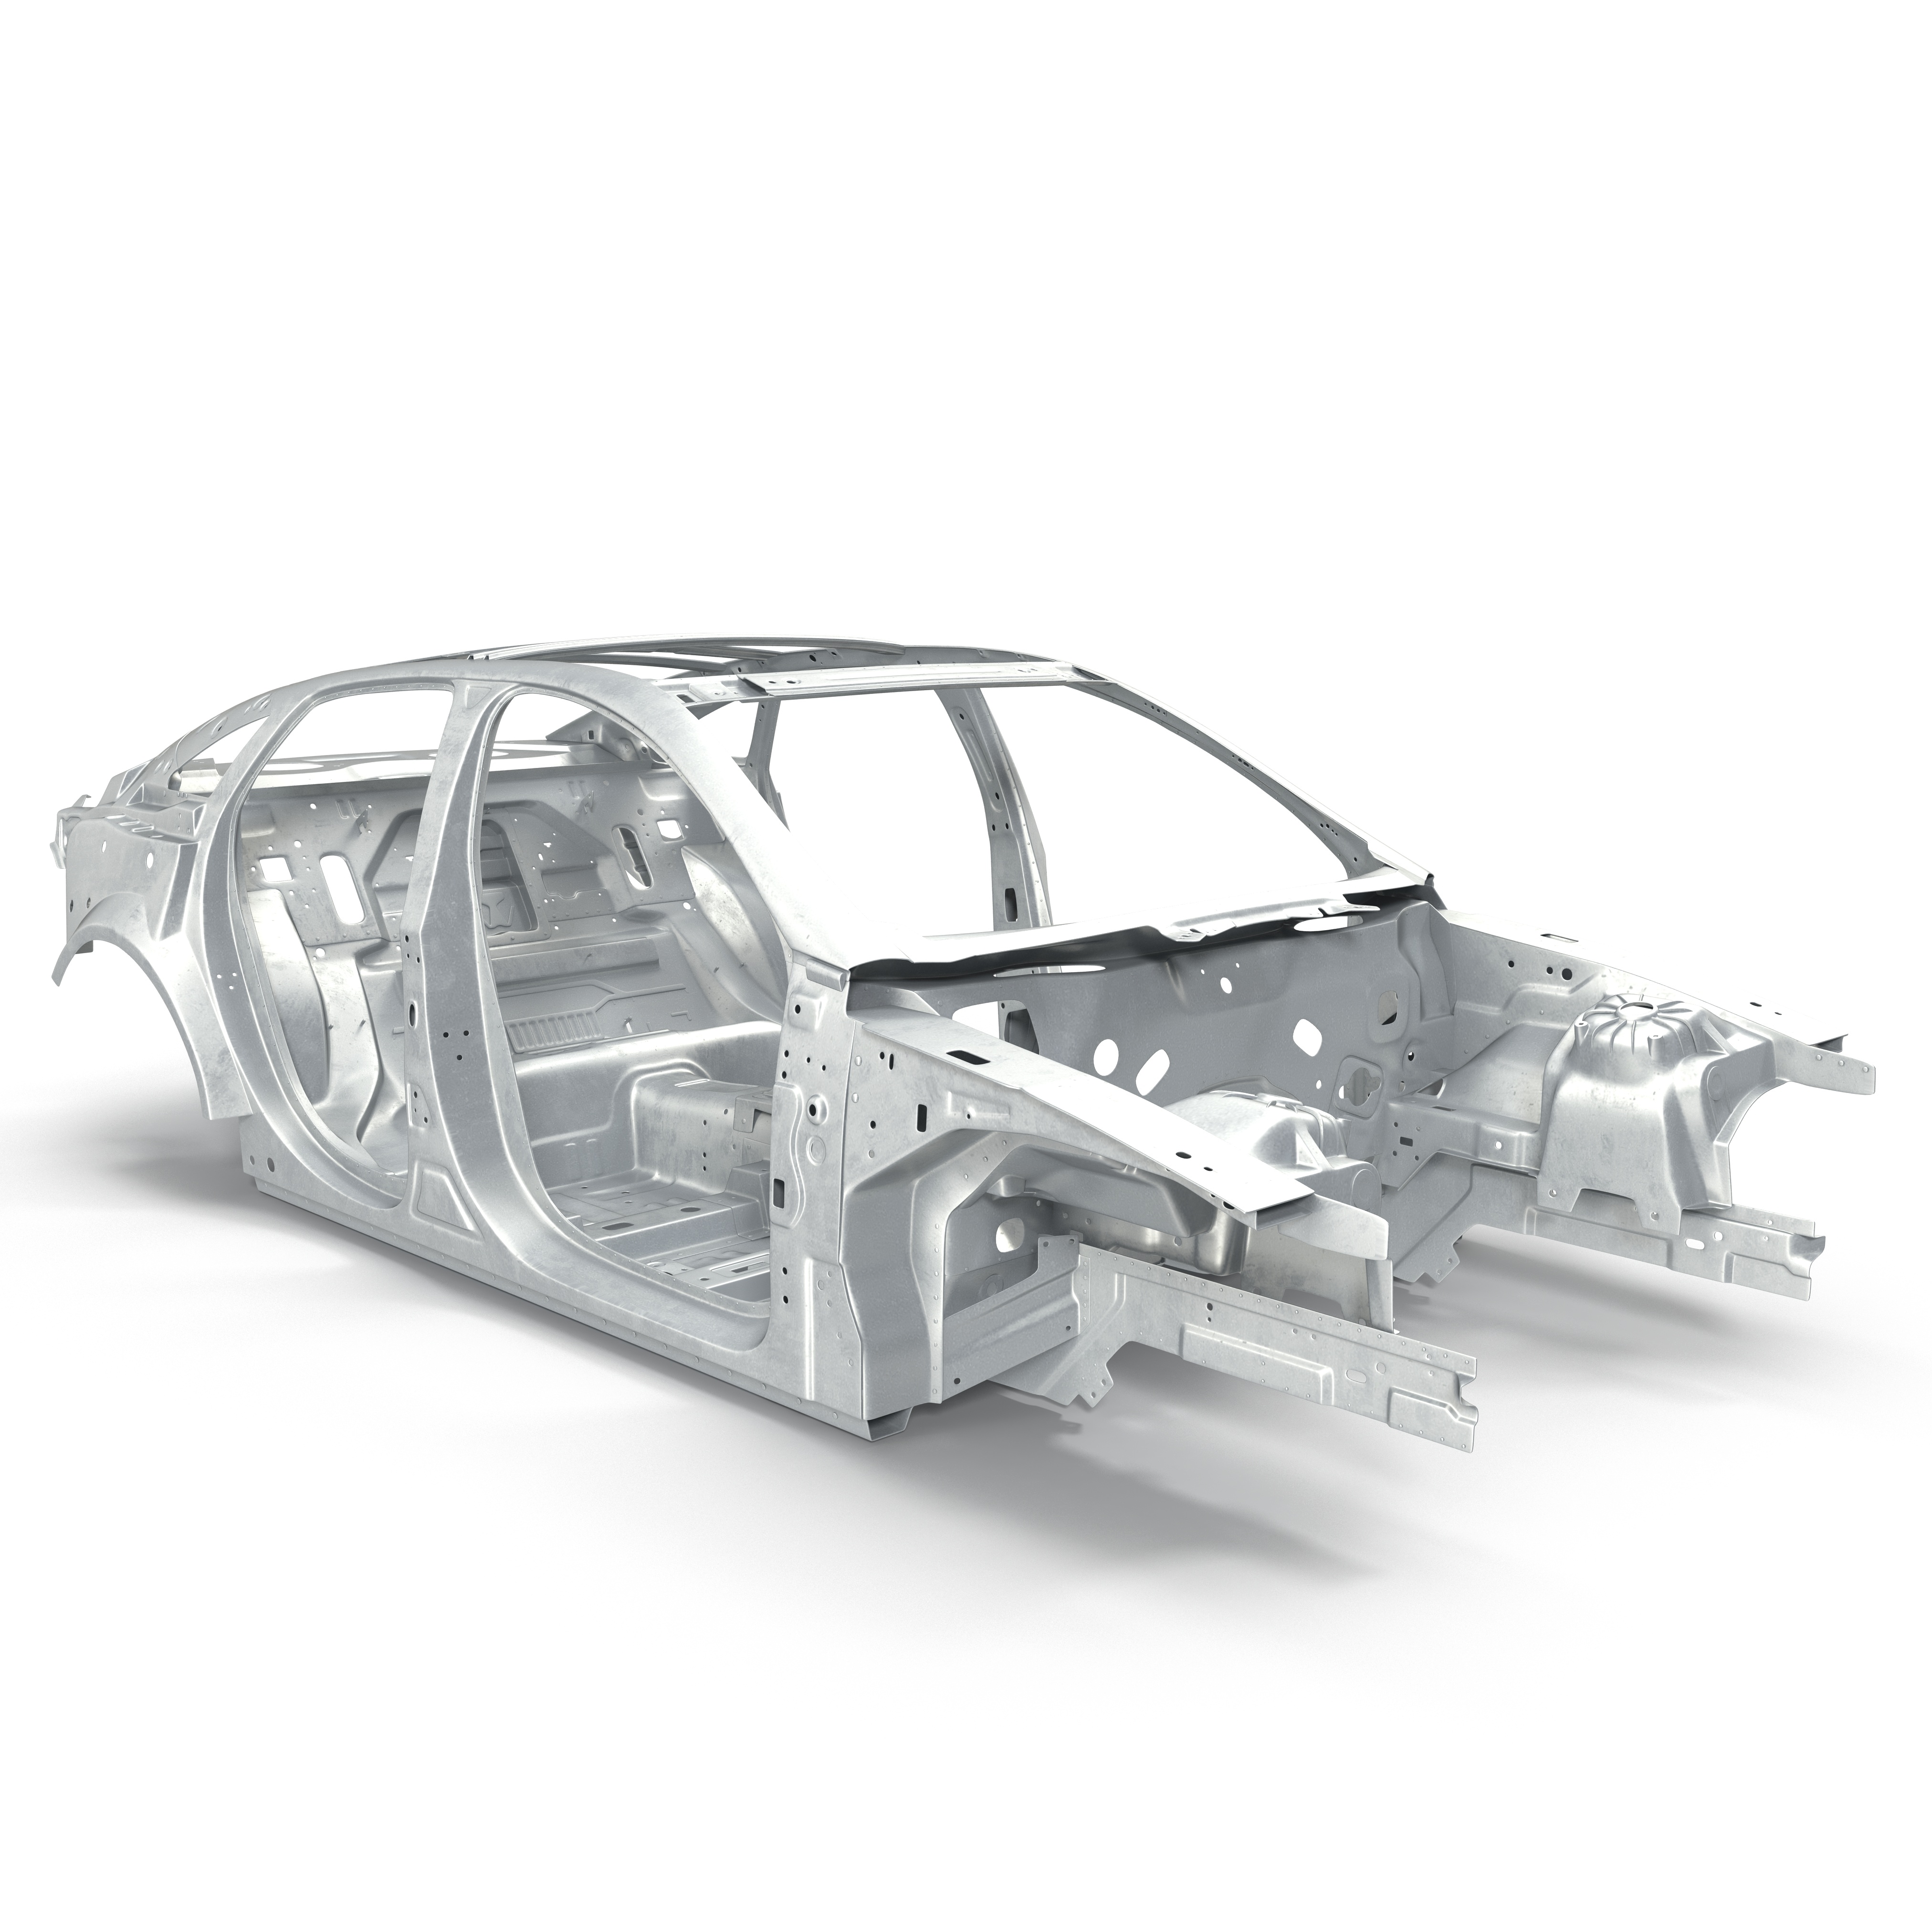 FFA - Carcass of a sedan car on white 3D illustration